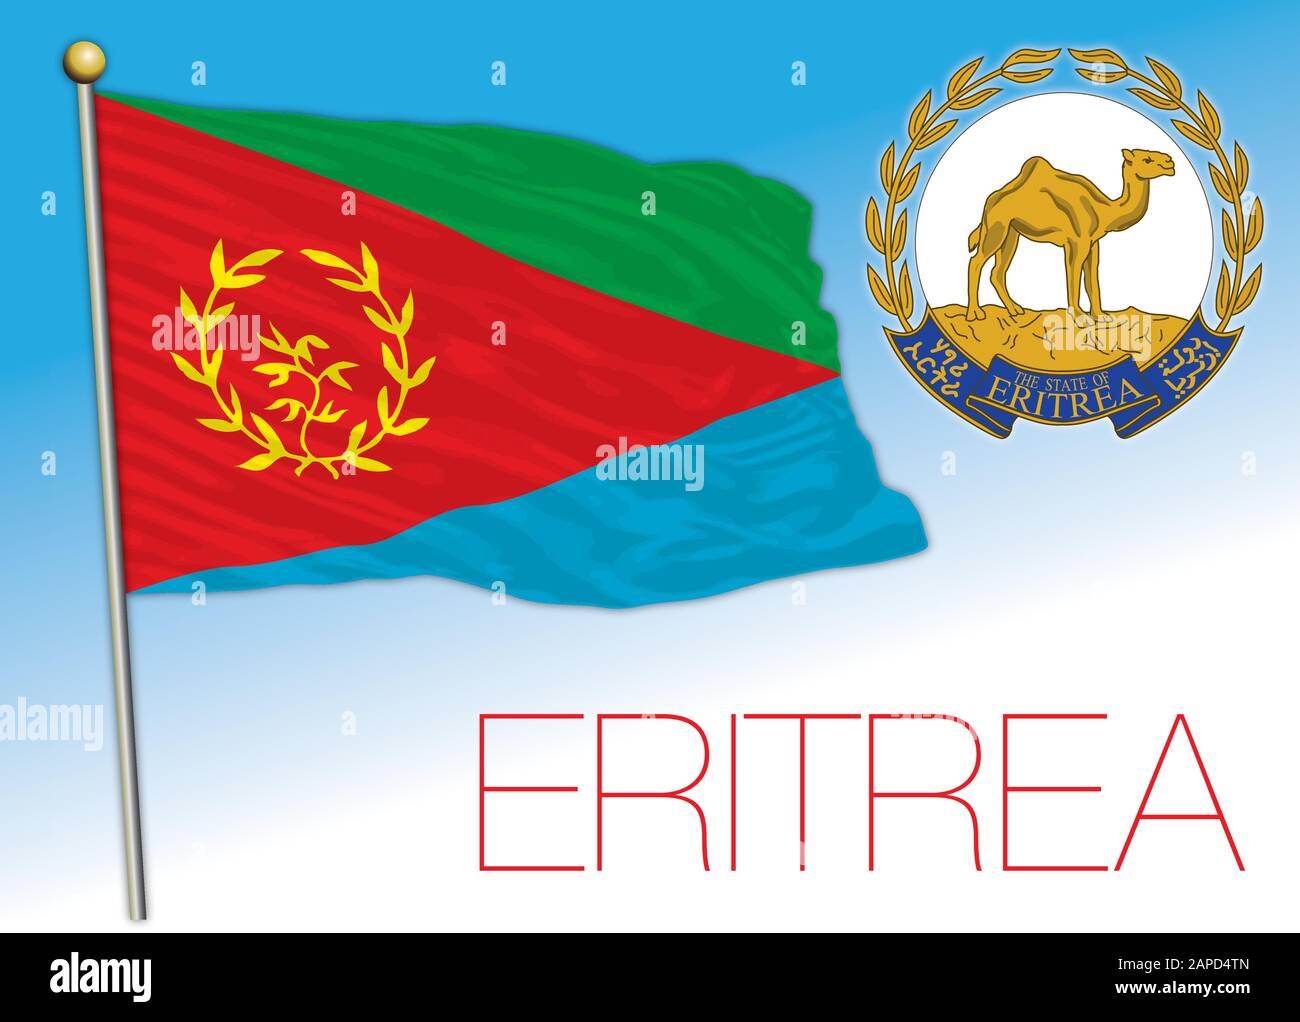 Offizielle Nationalflaggen und -Wappen Eritreas, afrikanisches Land, Vektorillustration Stock Vektor